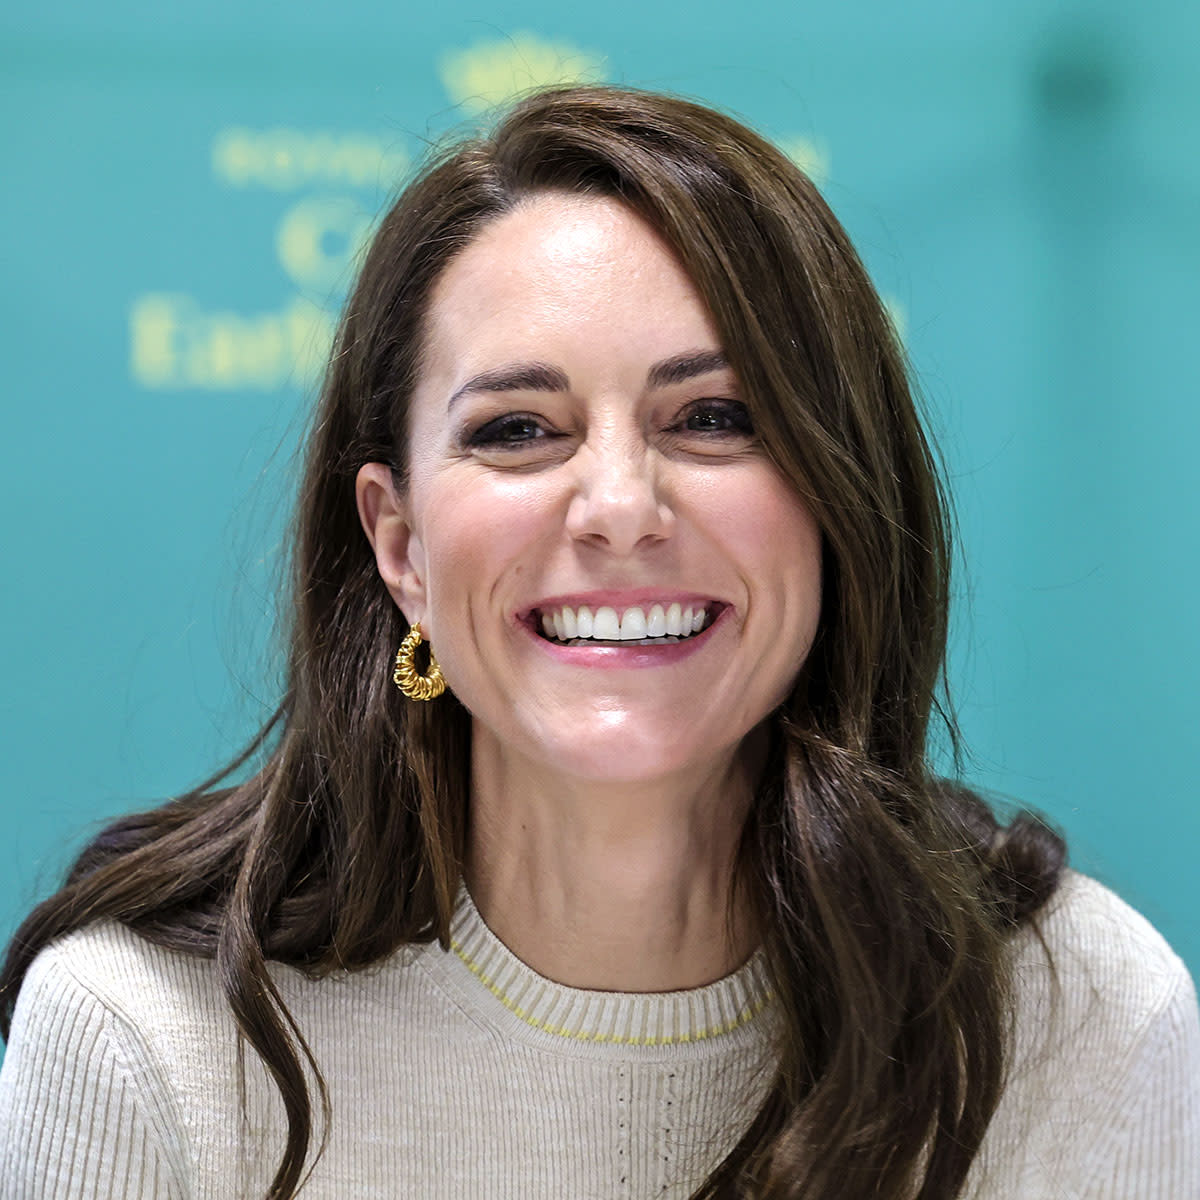 Kate Middleton smiling University of Leeds